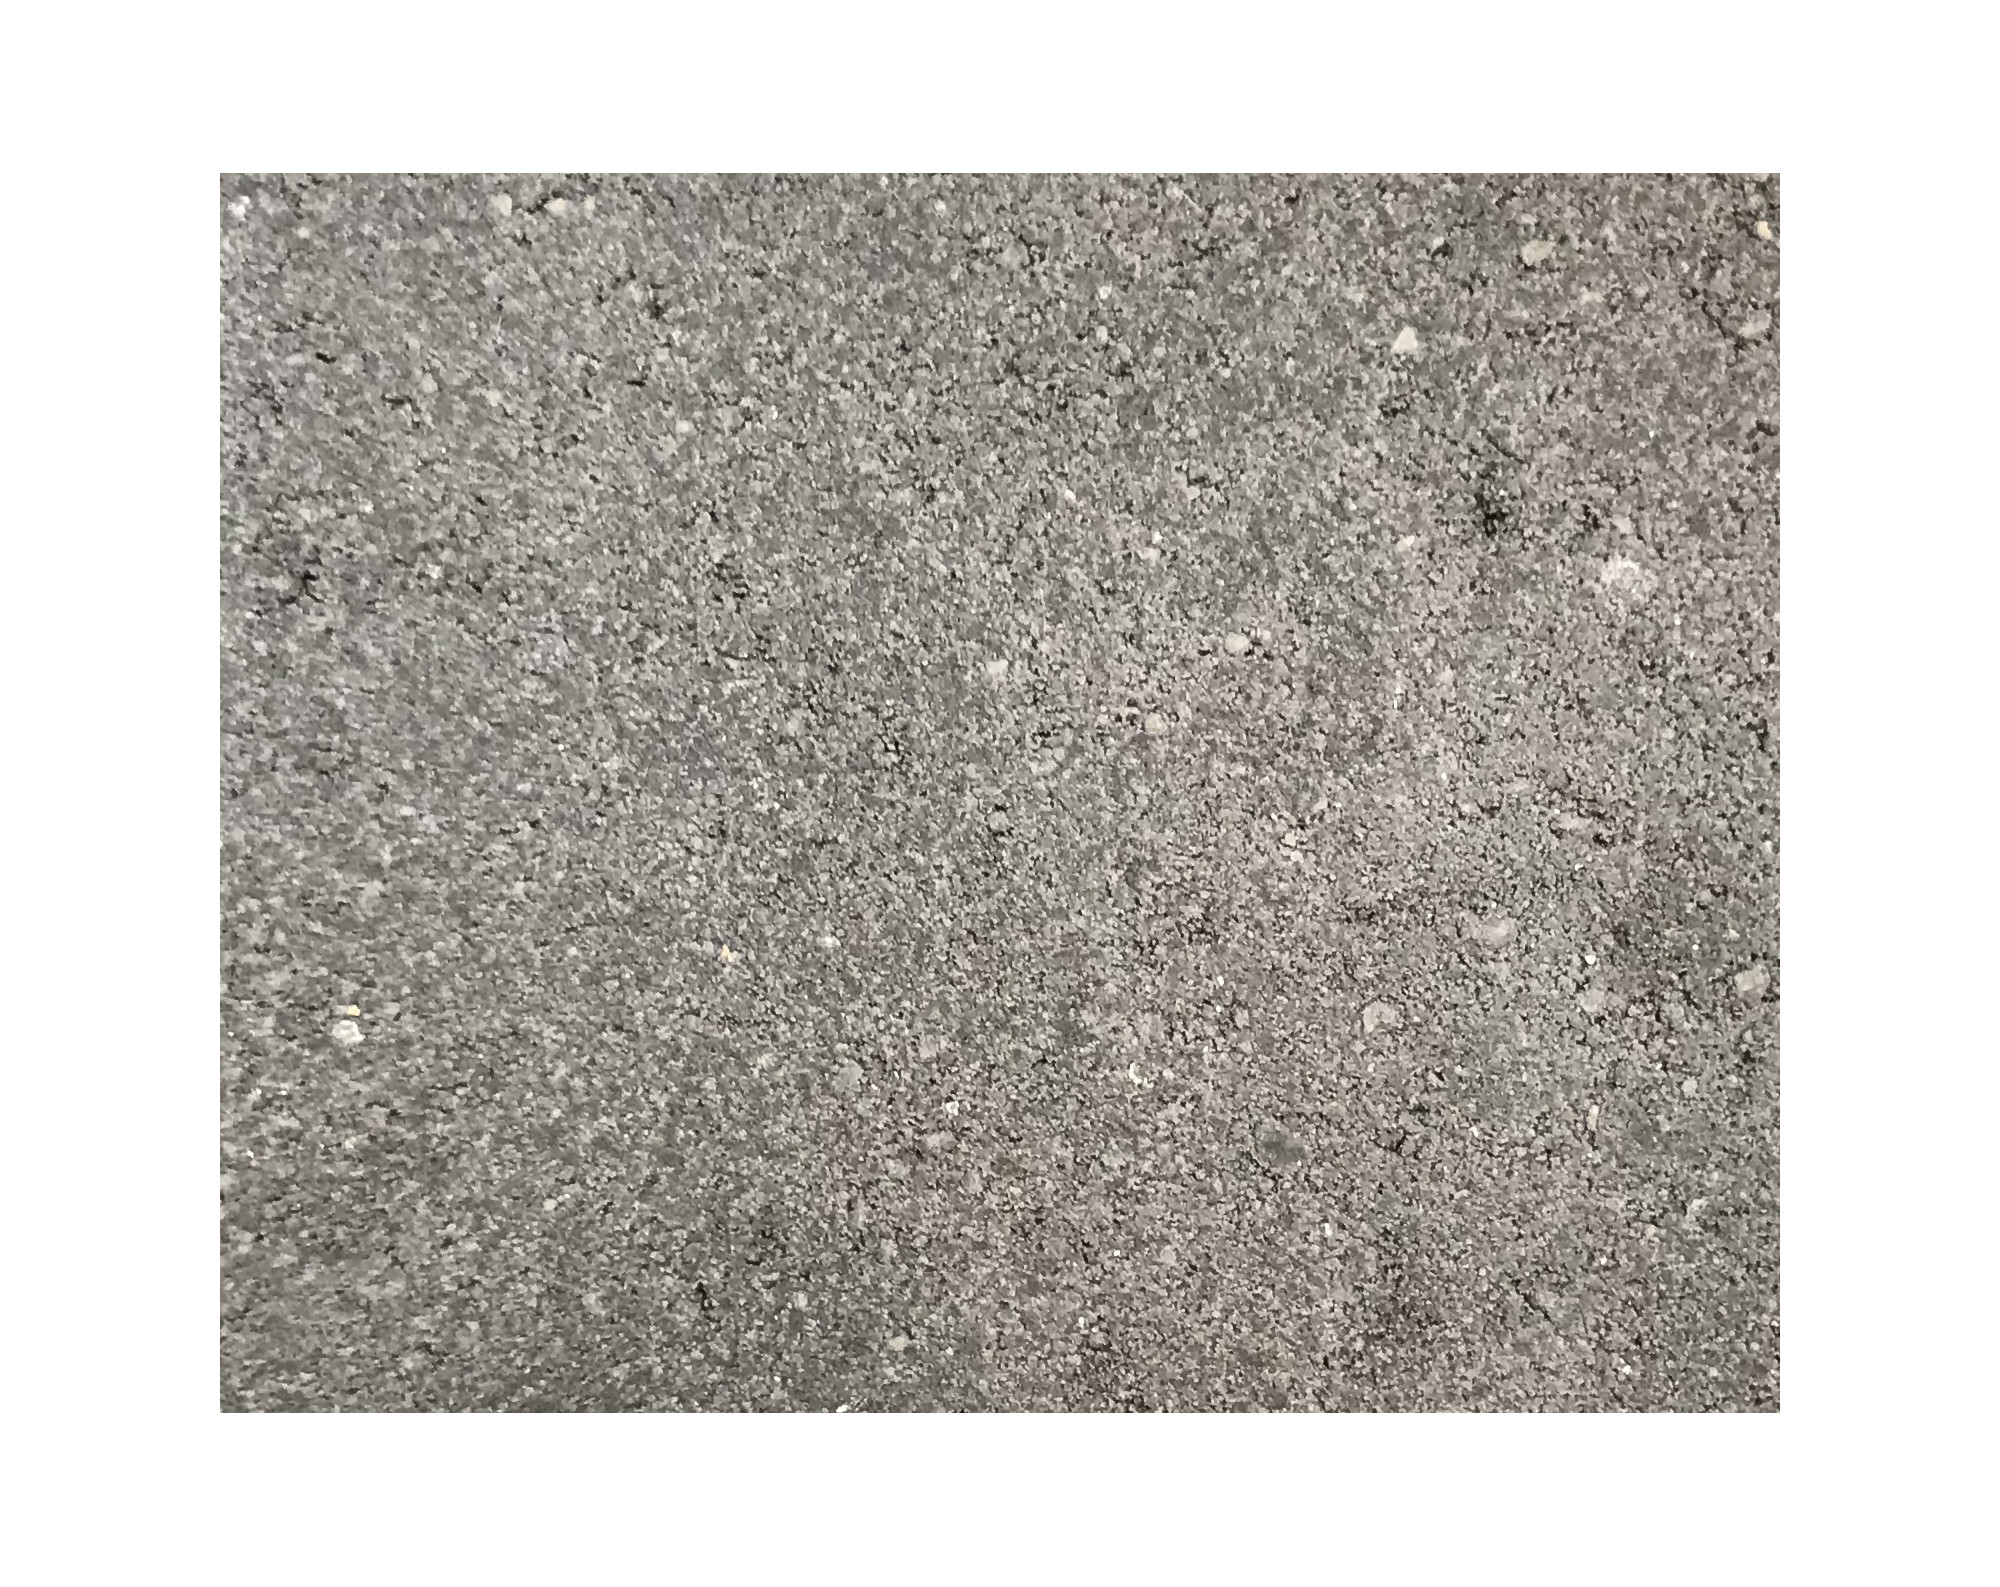 Harmo roc nevadaset, rustica-serie, ovaal d: 6,00mx12,60m, a.zwart, beton